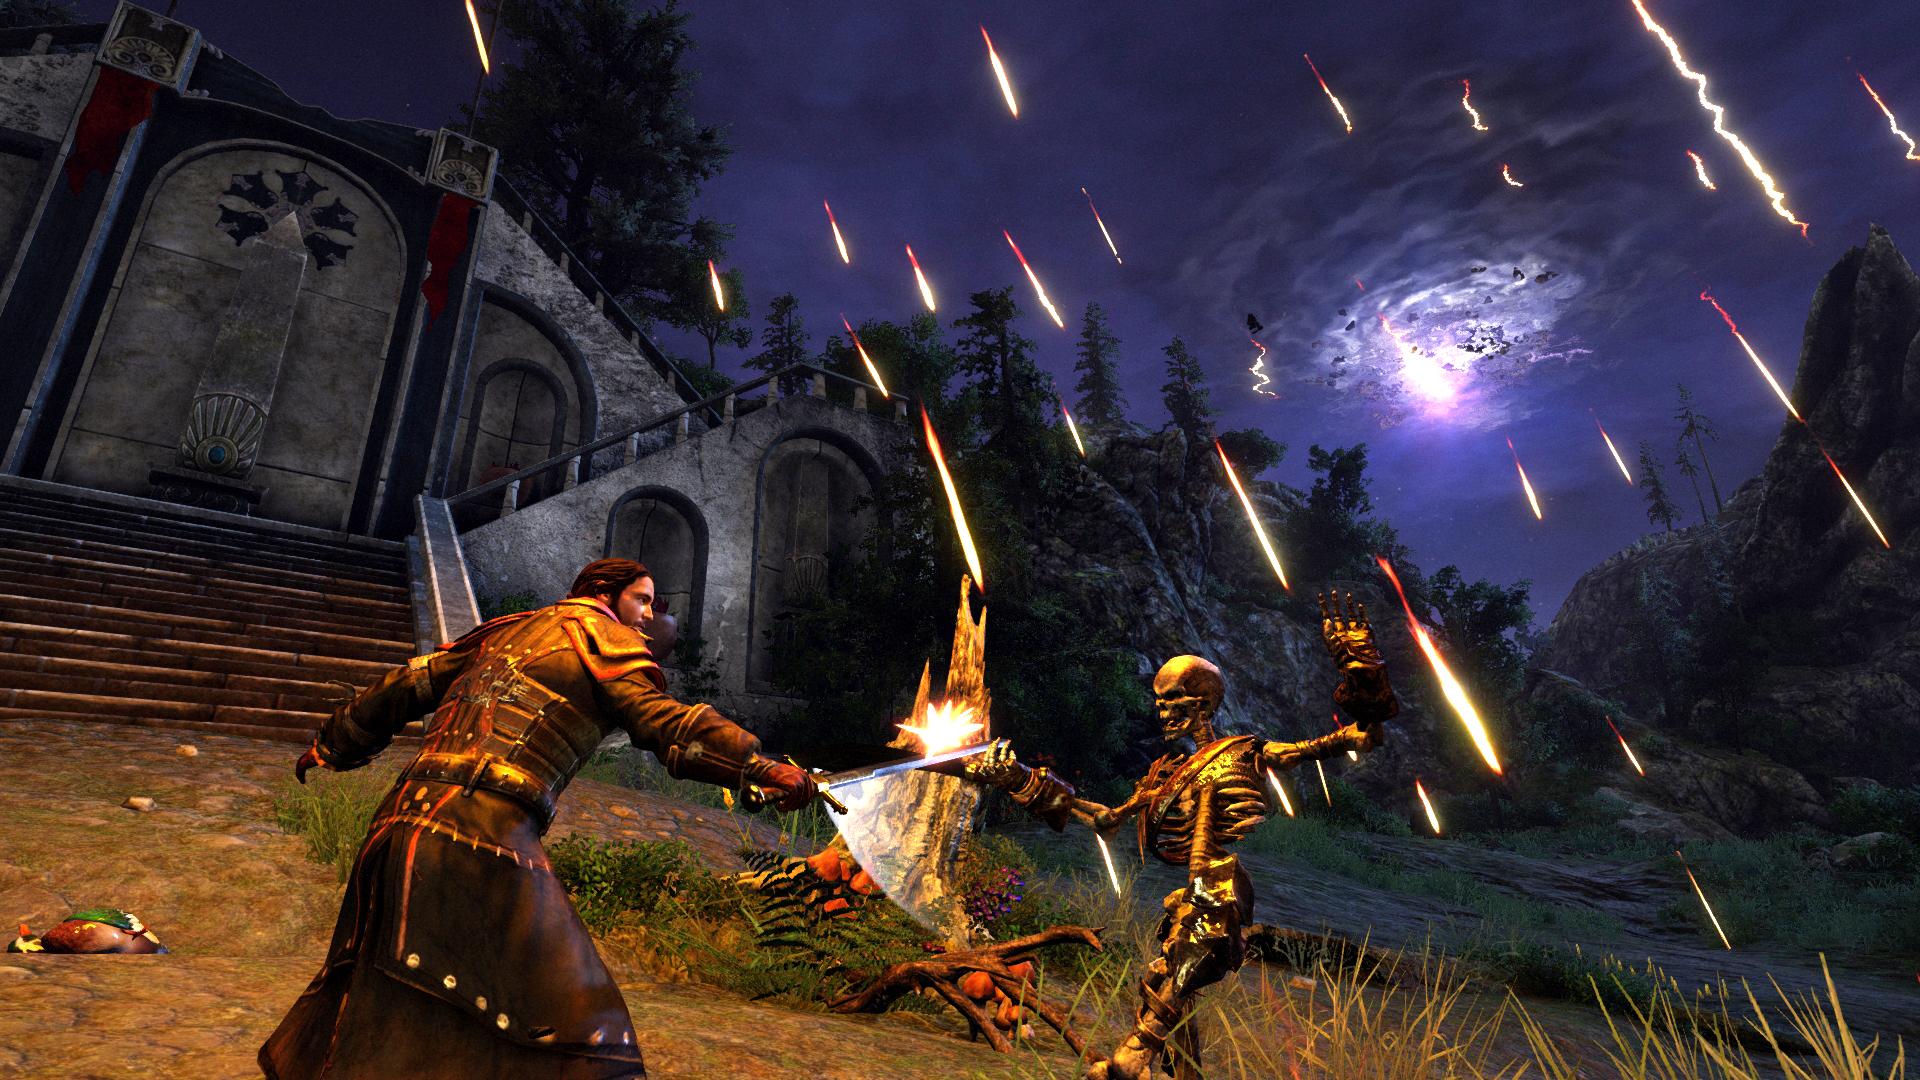 Screenshot №12 from game Risen 3 - Titan Lords